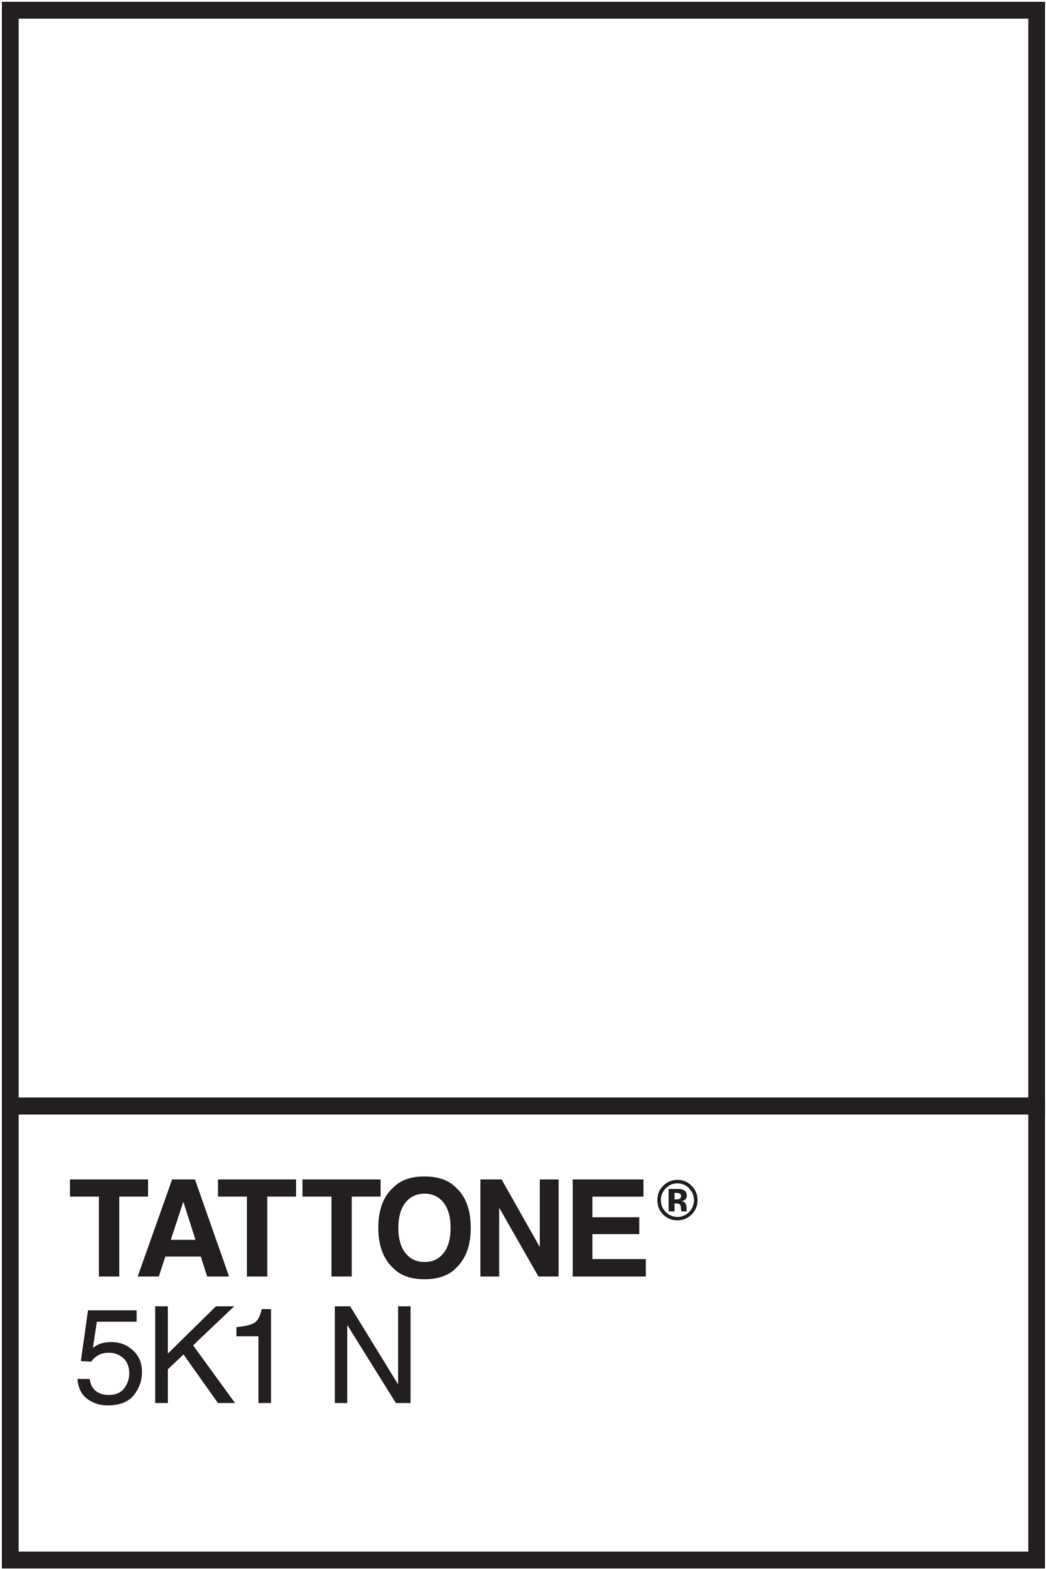 Tattone - Tattone - Tattone - Tattone - Tattone Transparent (2048x2048), Png Download